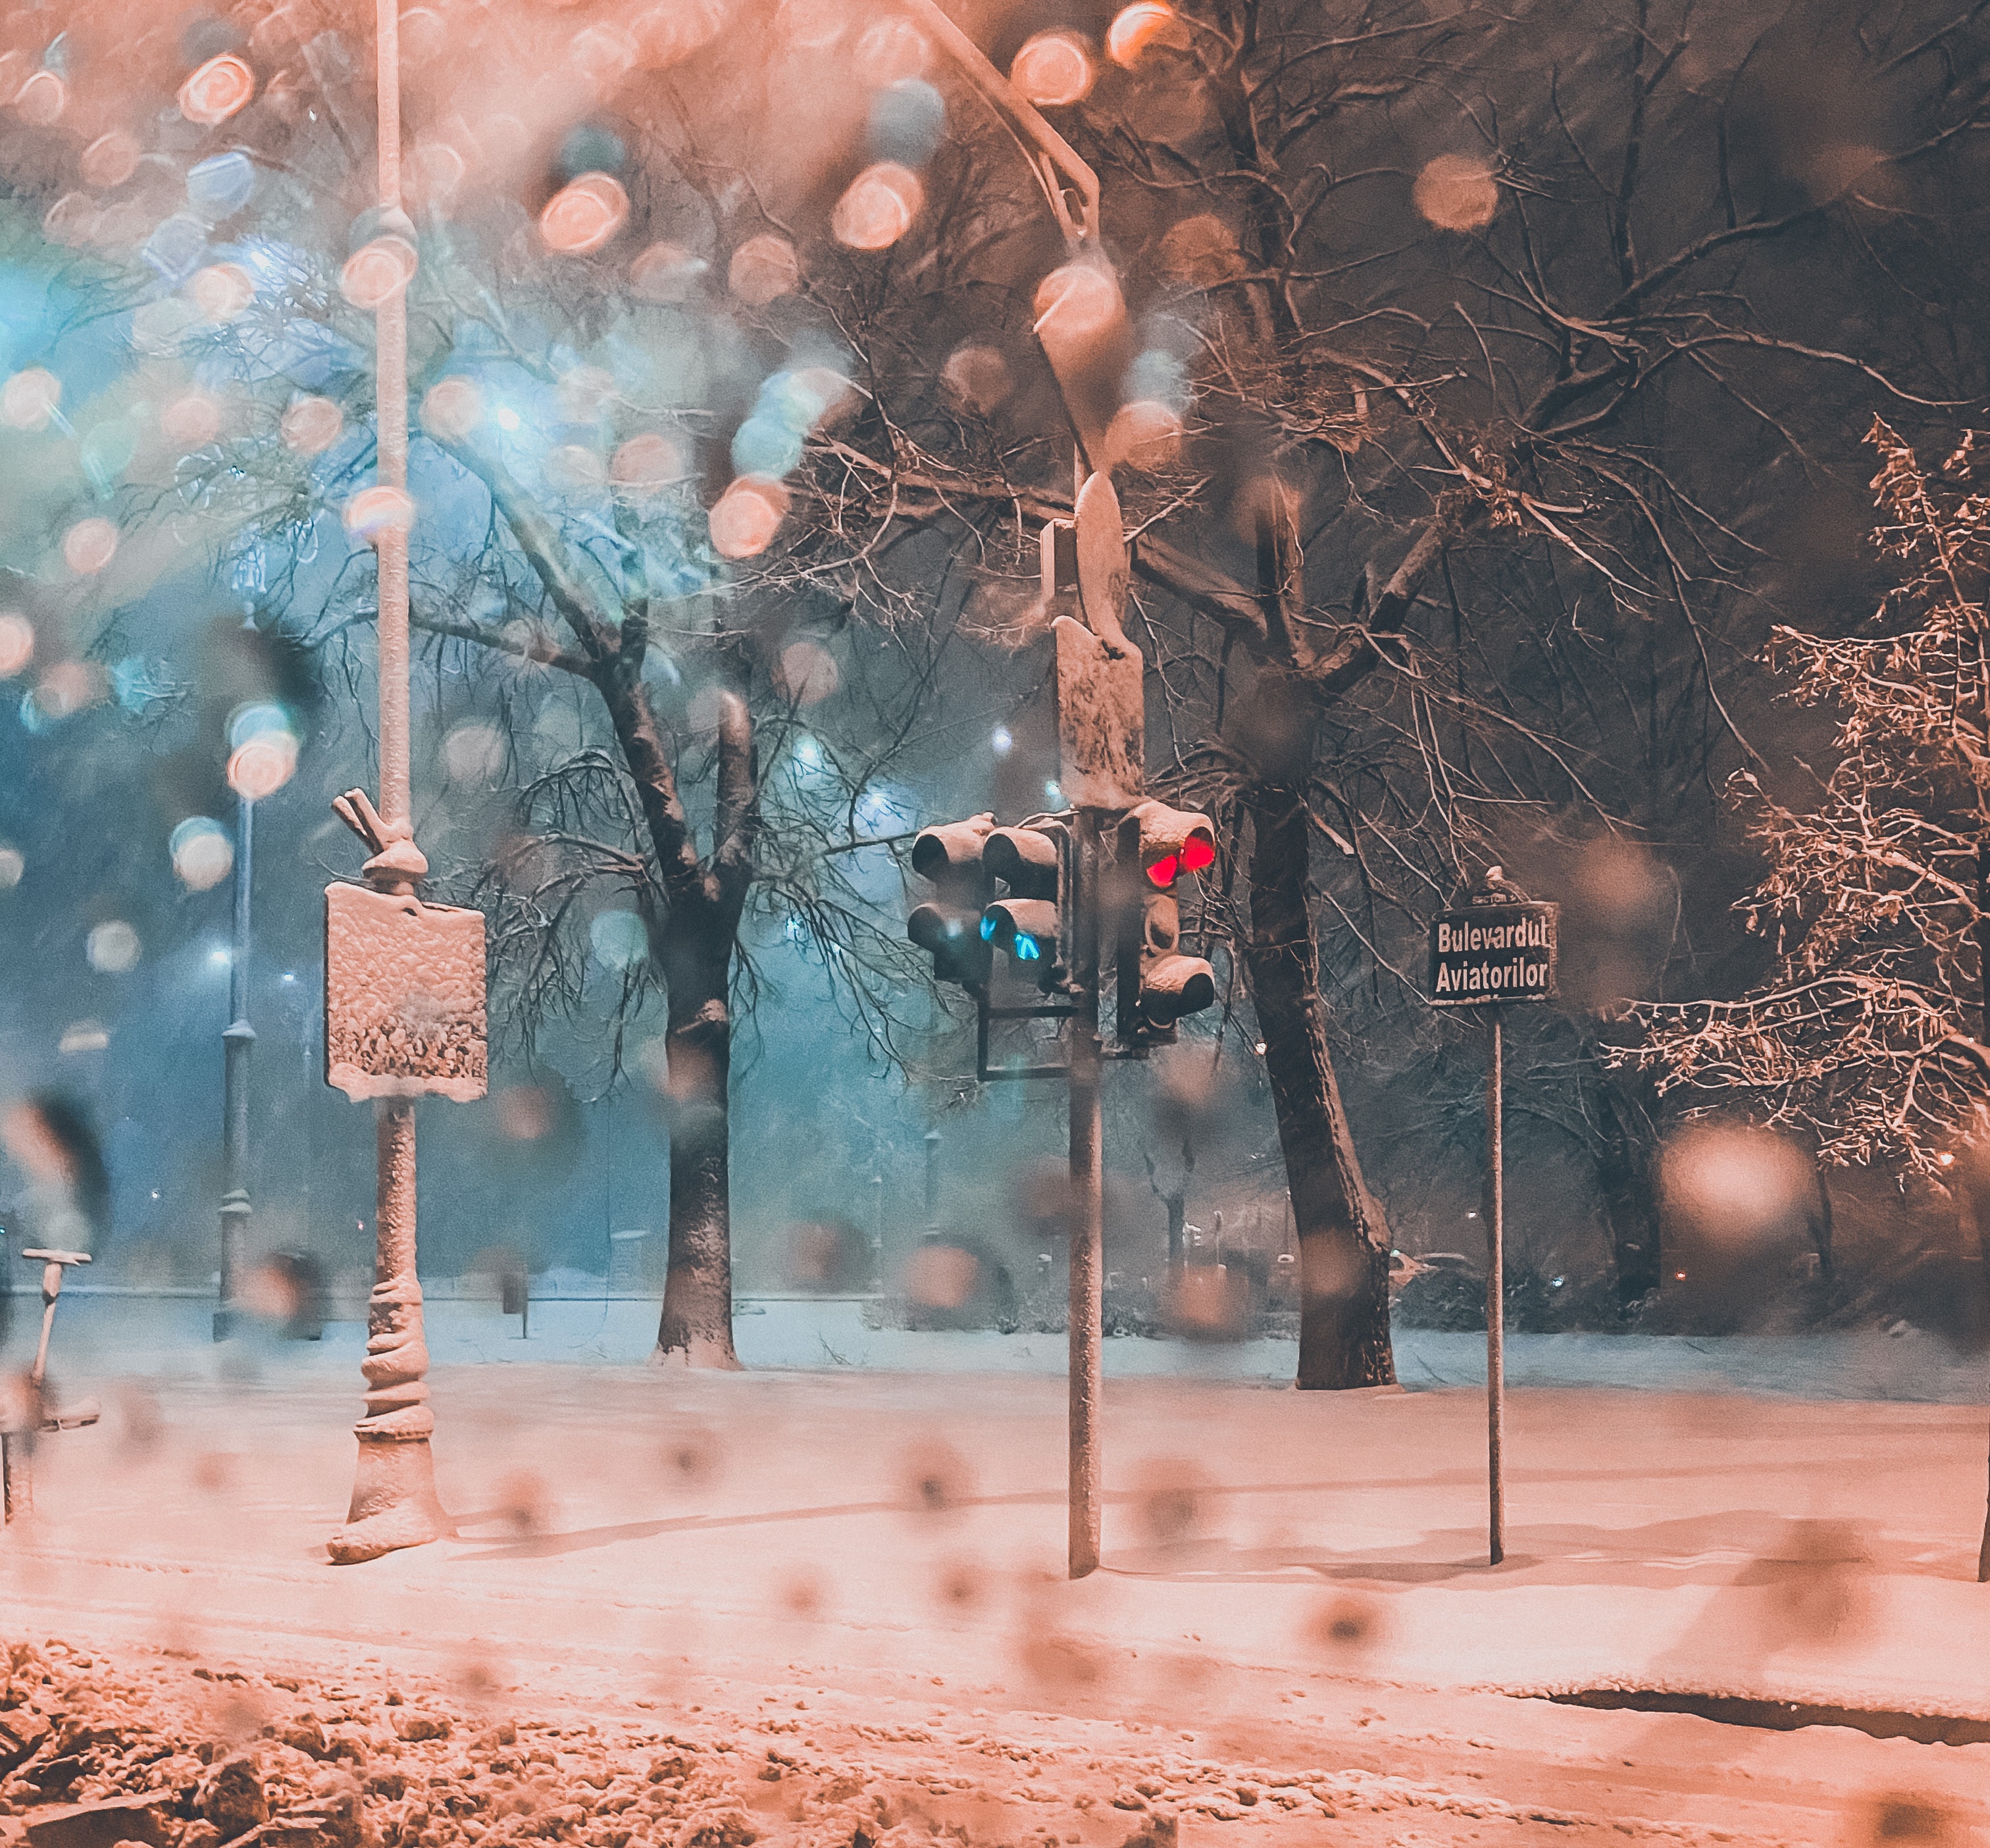 traffic light, winter, snow, miscellanea, miscellaneous, street, snowstorm images